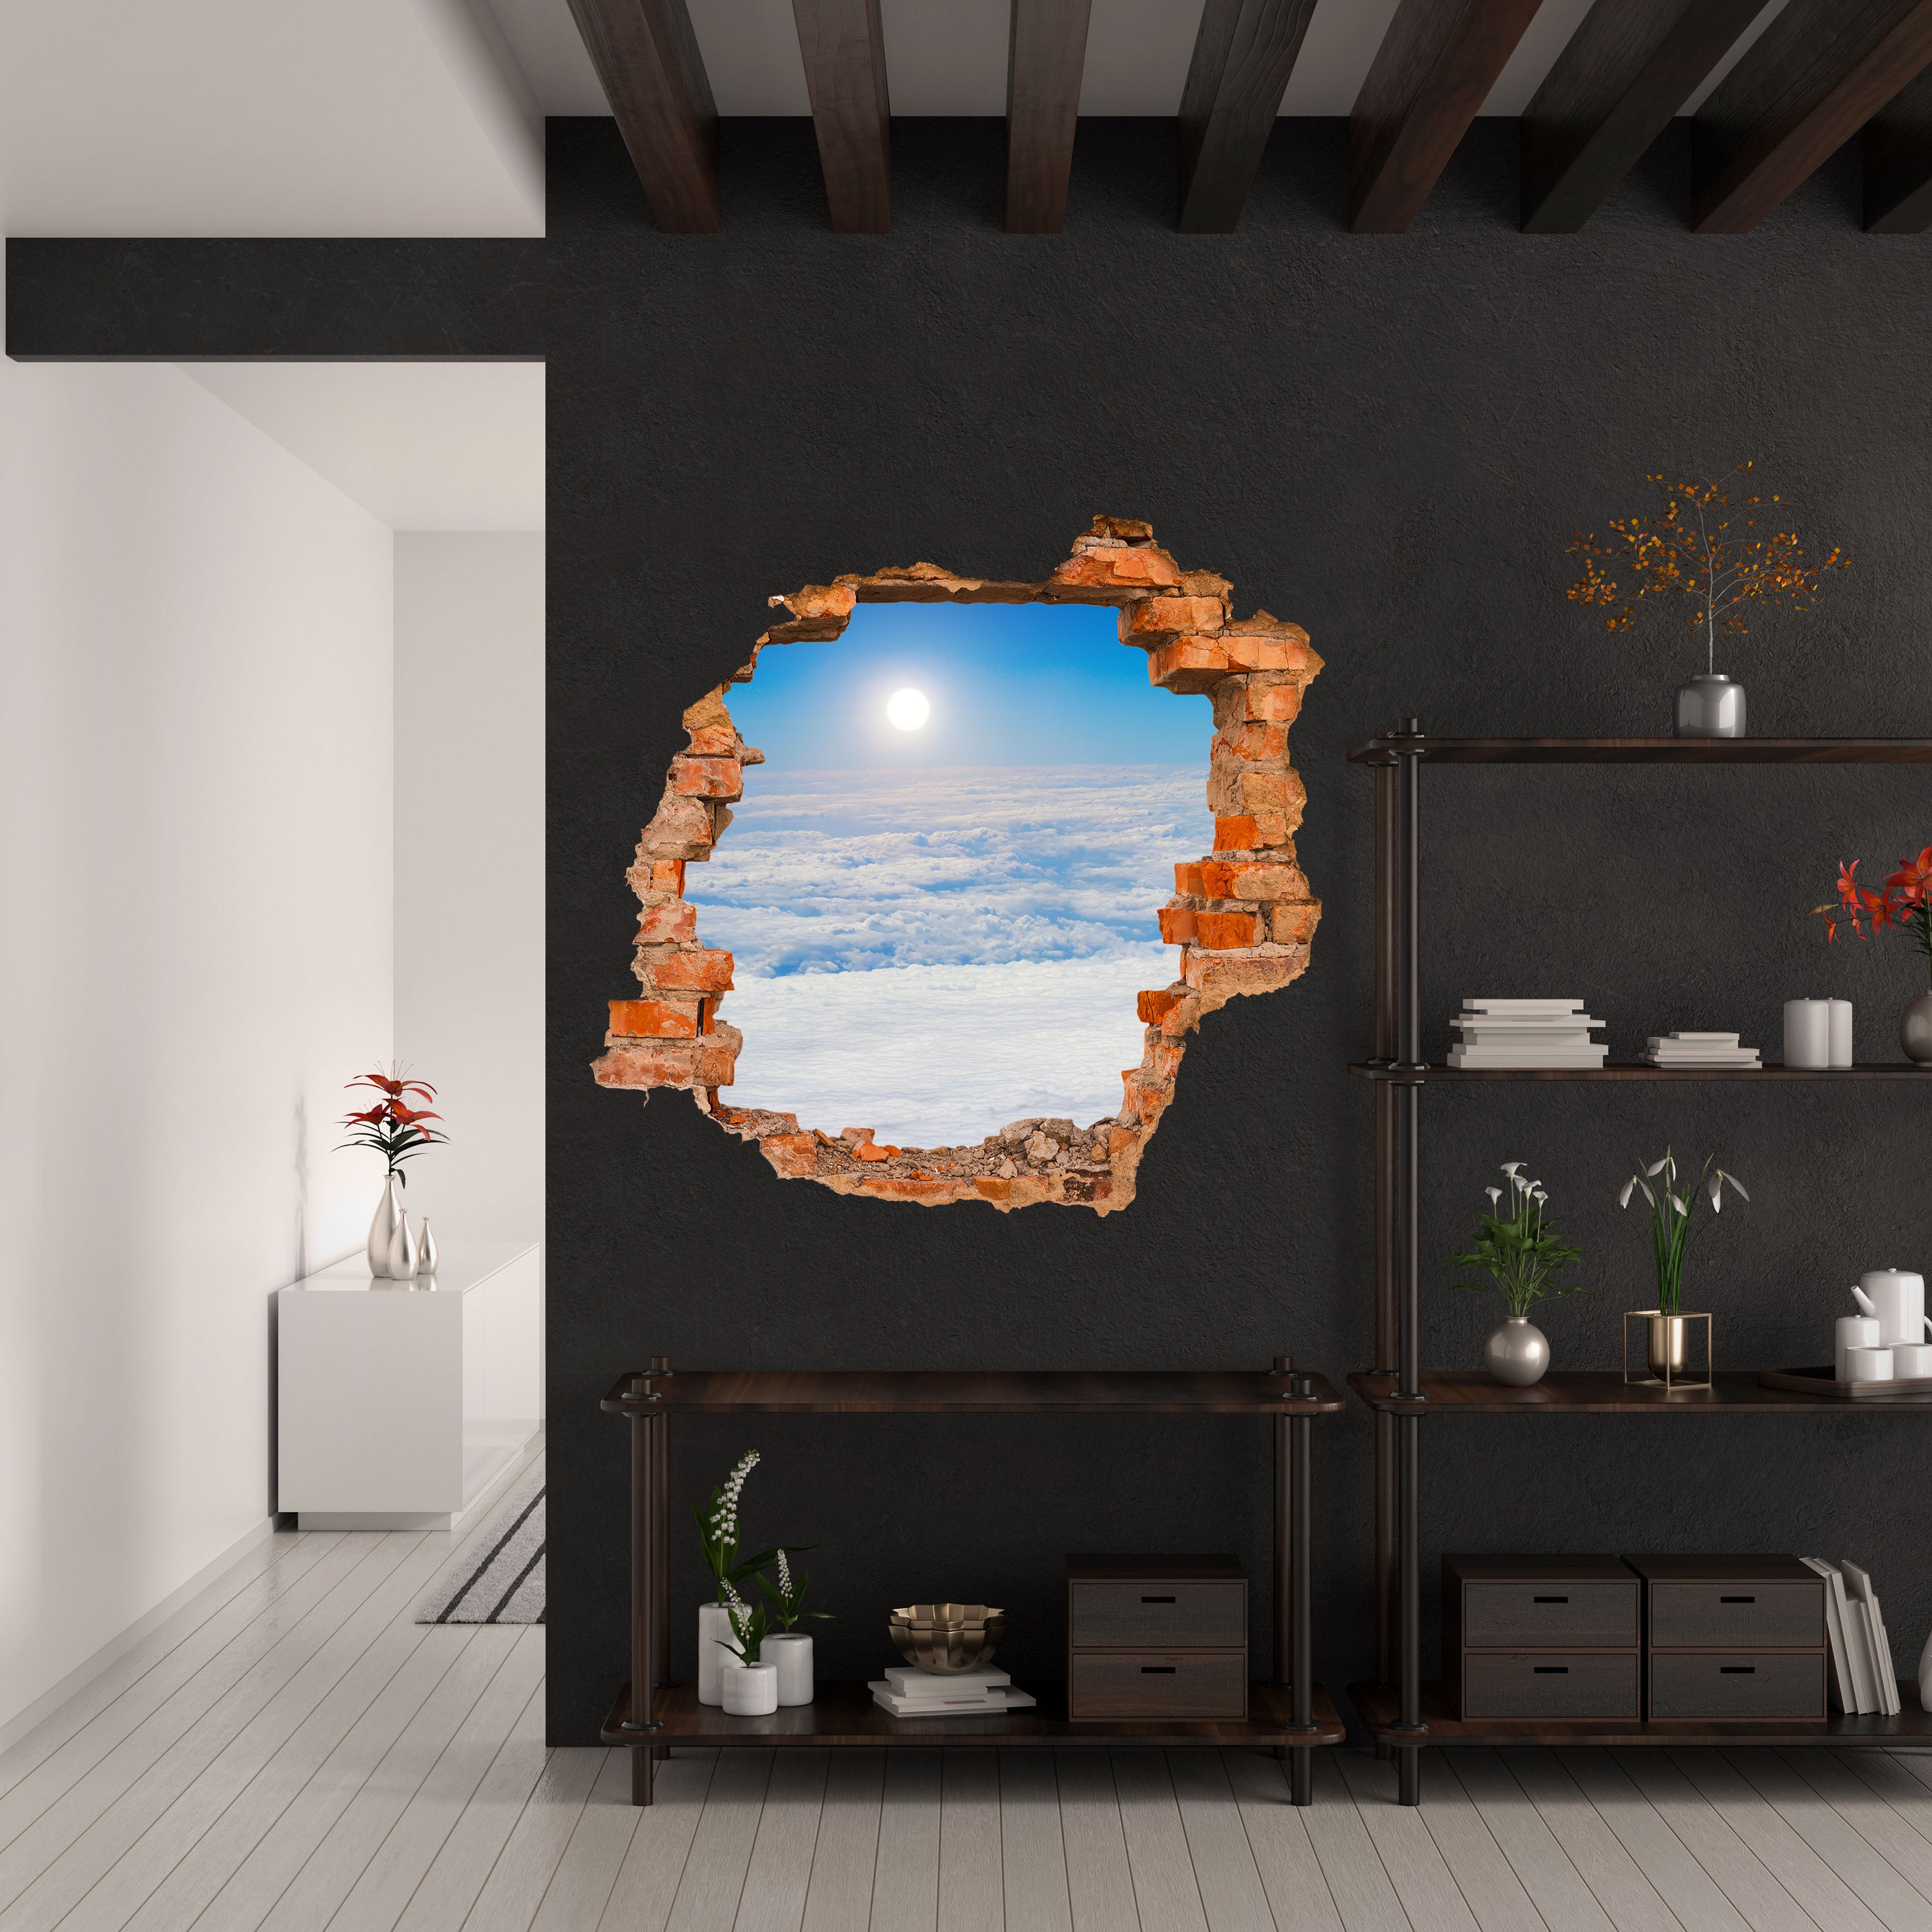 Sticker mural 3D sol nuageux - sticker mural M1016